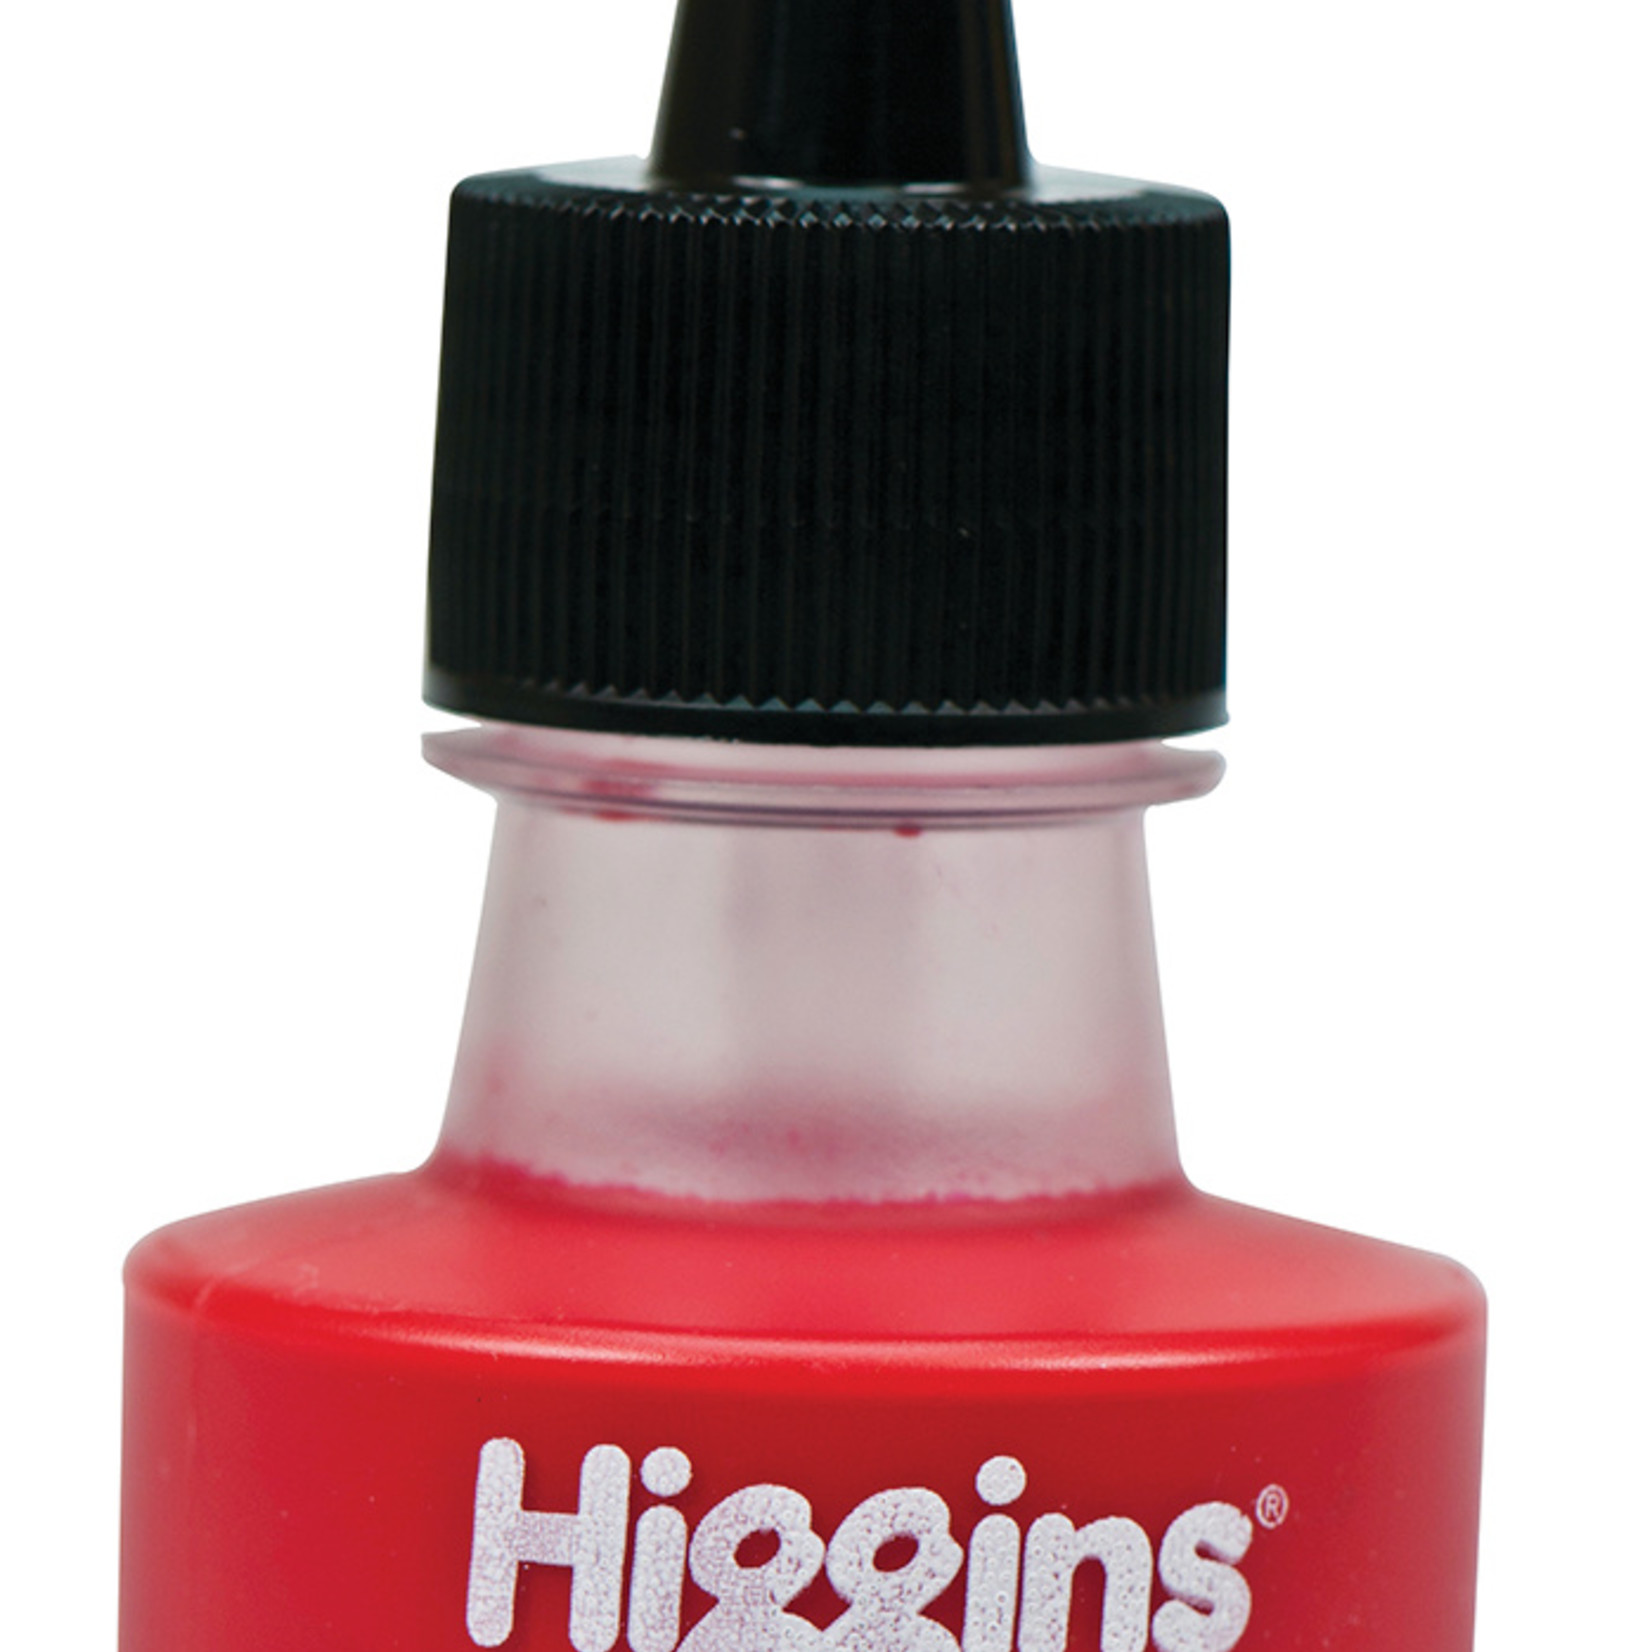 HIGGINS DYE-BASED DRAWING INK 1OZ CARMINE RED